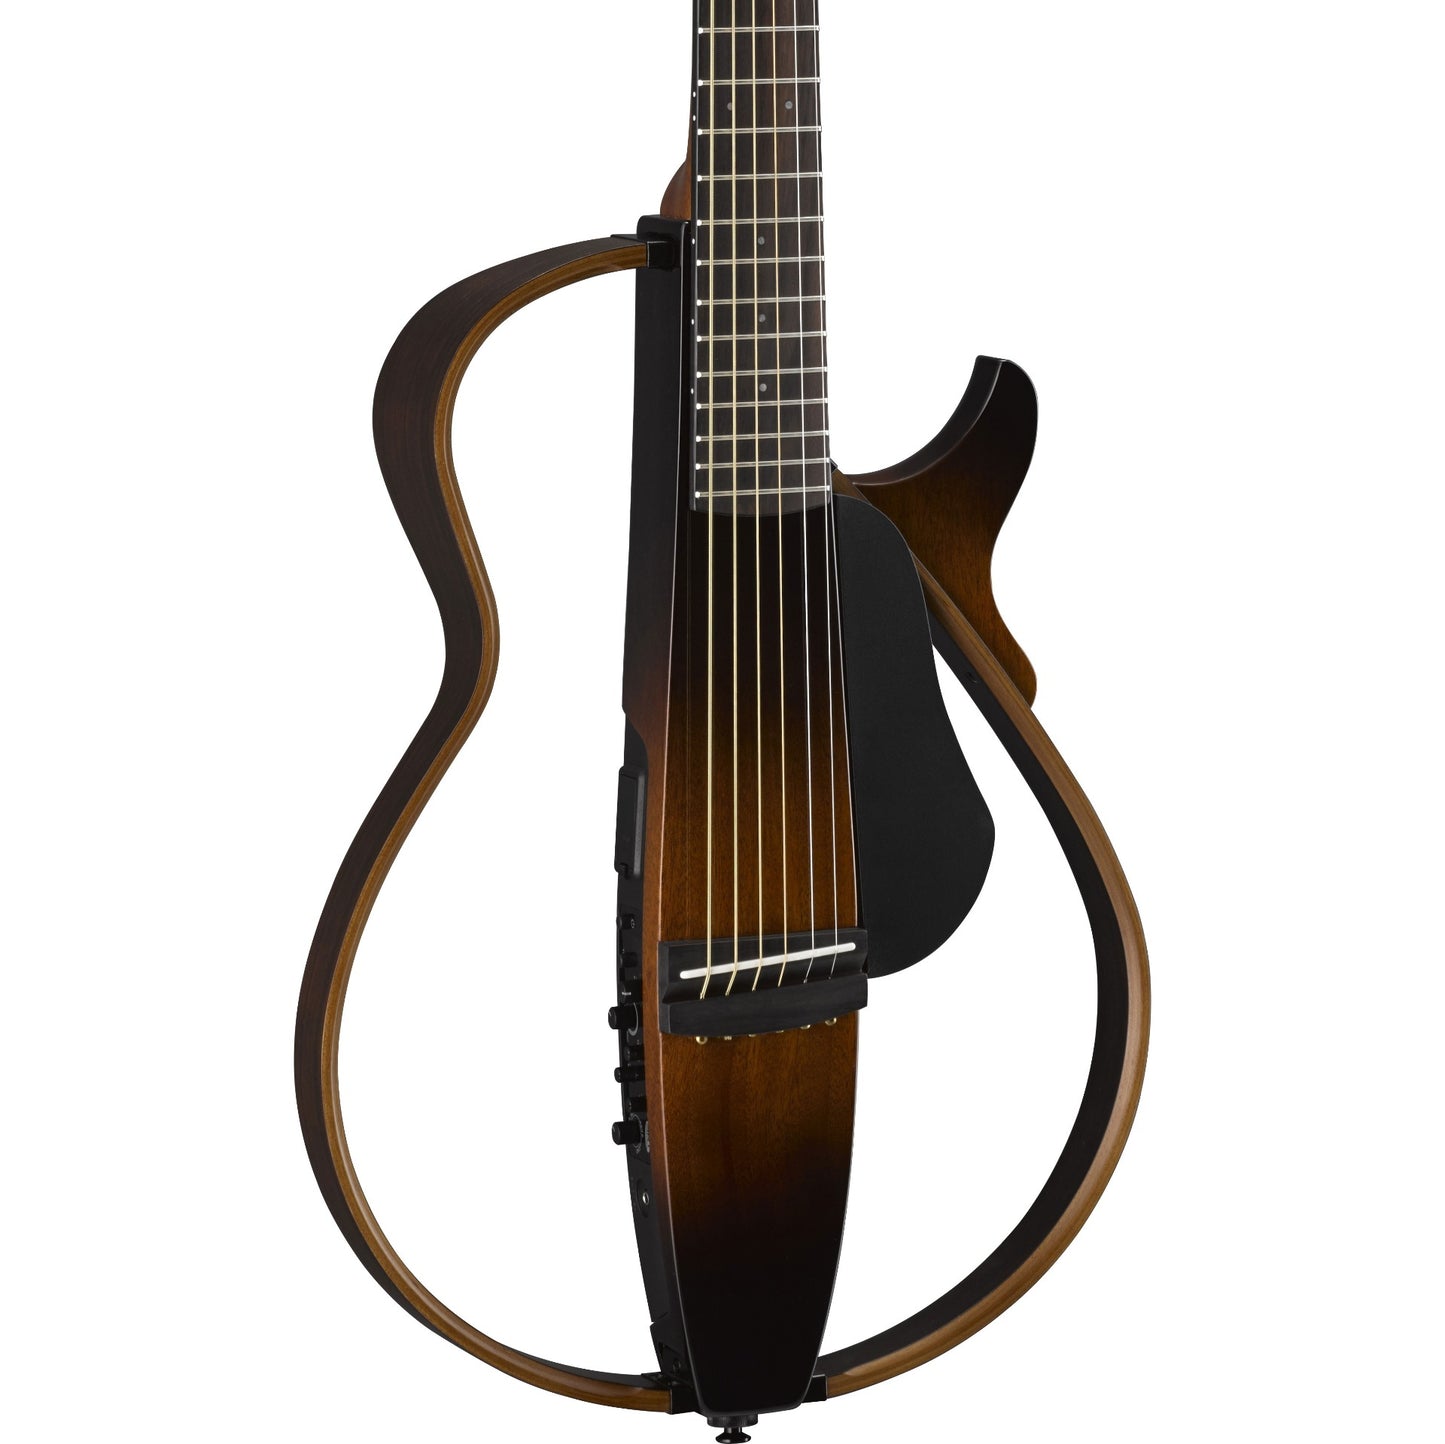 Yamaha Steel String Silent Guitar, Tobacco Sunburst